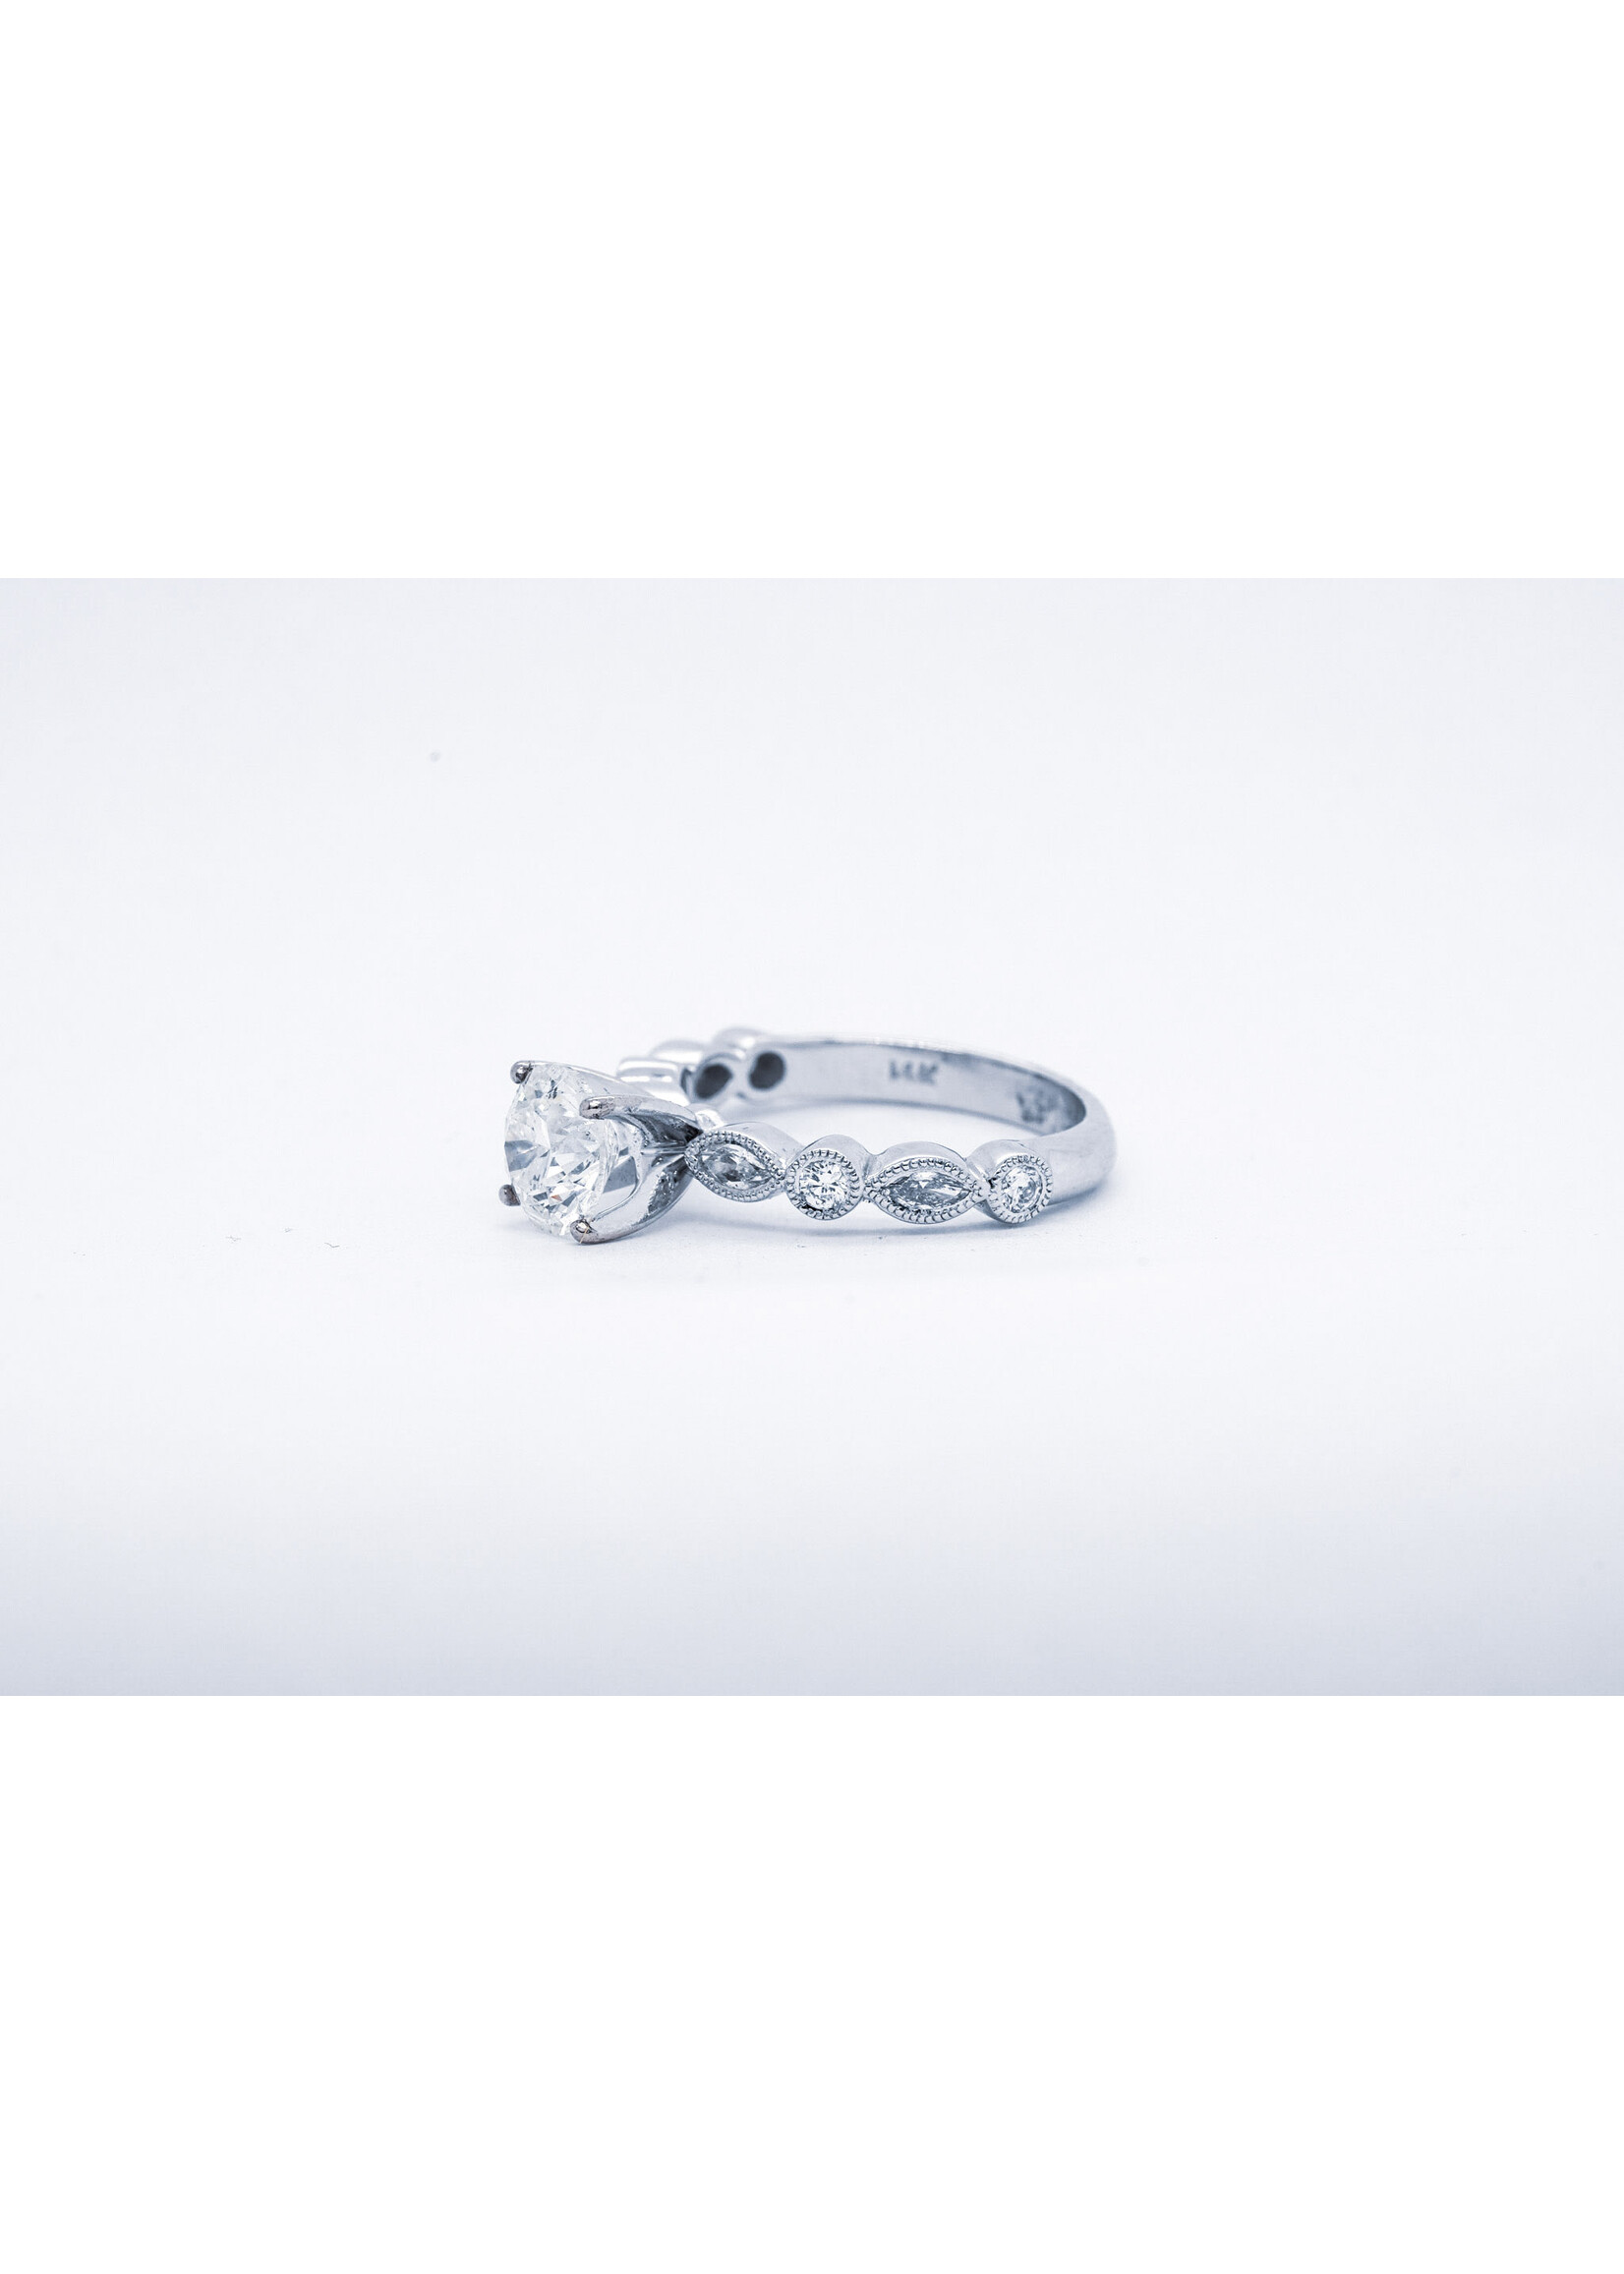 14KW 4.01g 2.11ctw (1.46ctr) I/SI2 Round Leo Diamond Engagement Ring (size 6.5)